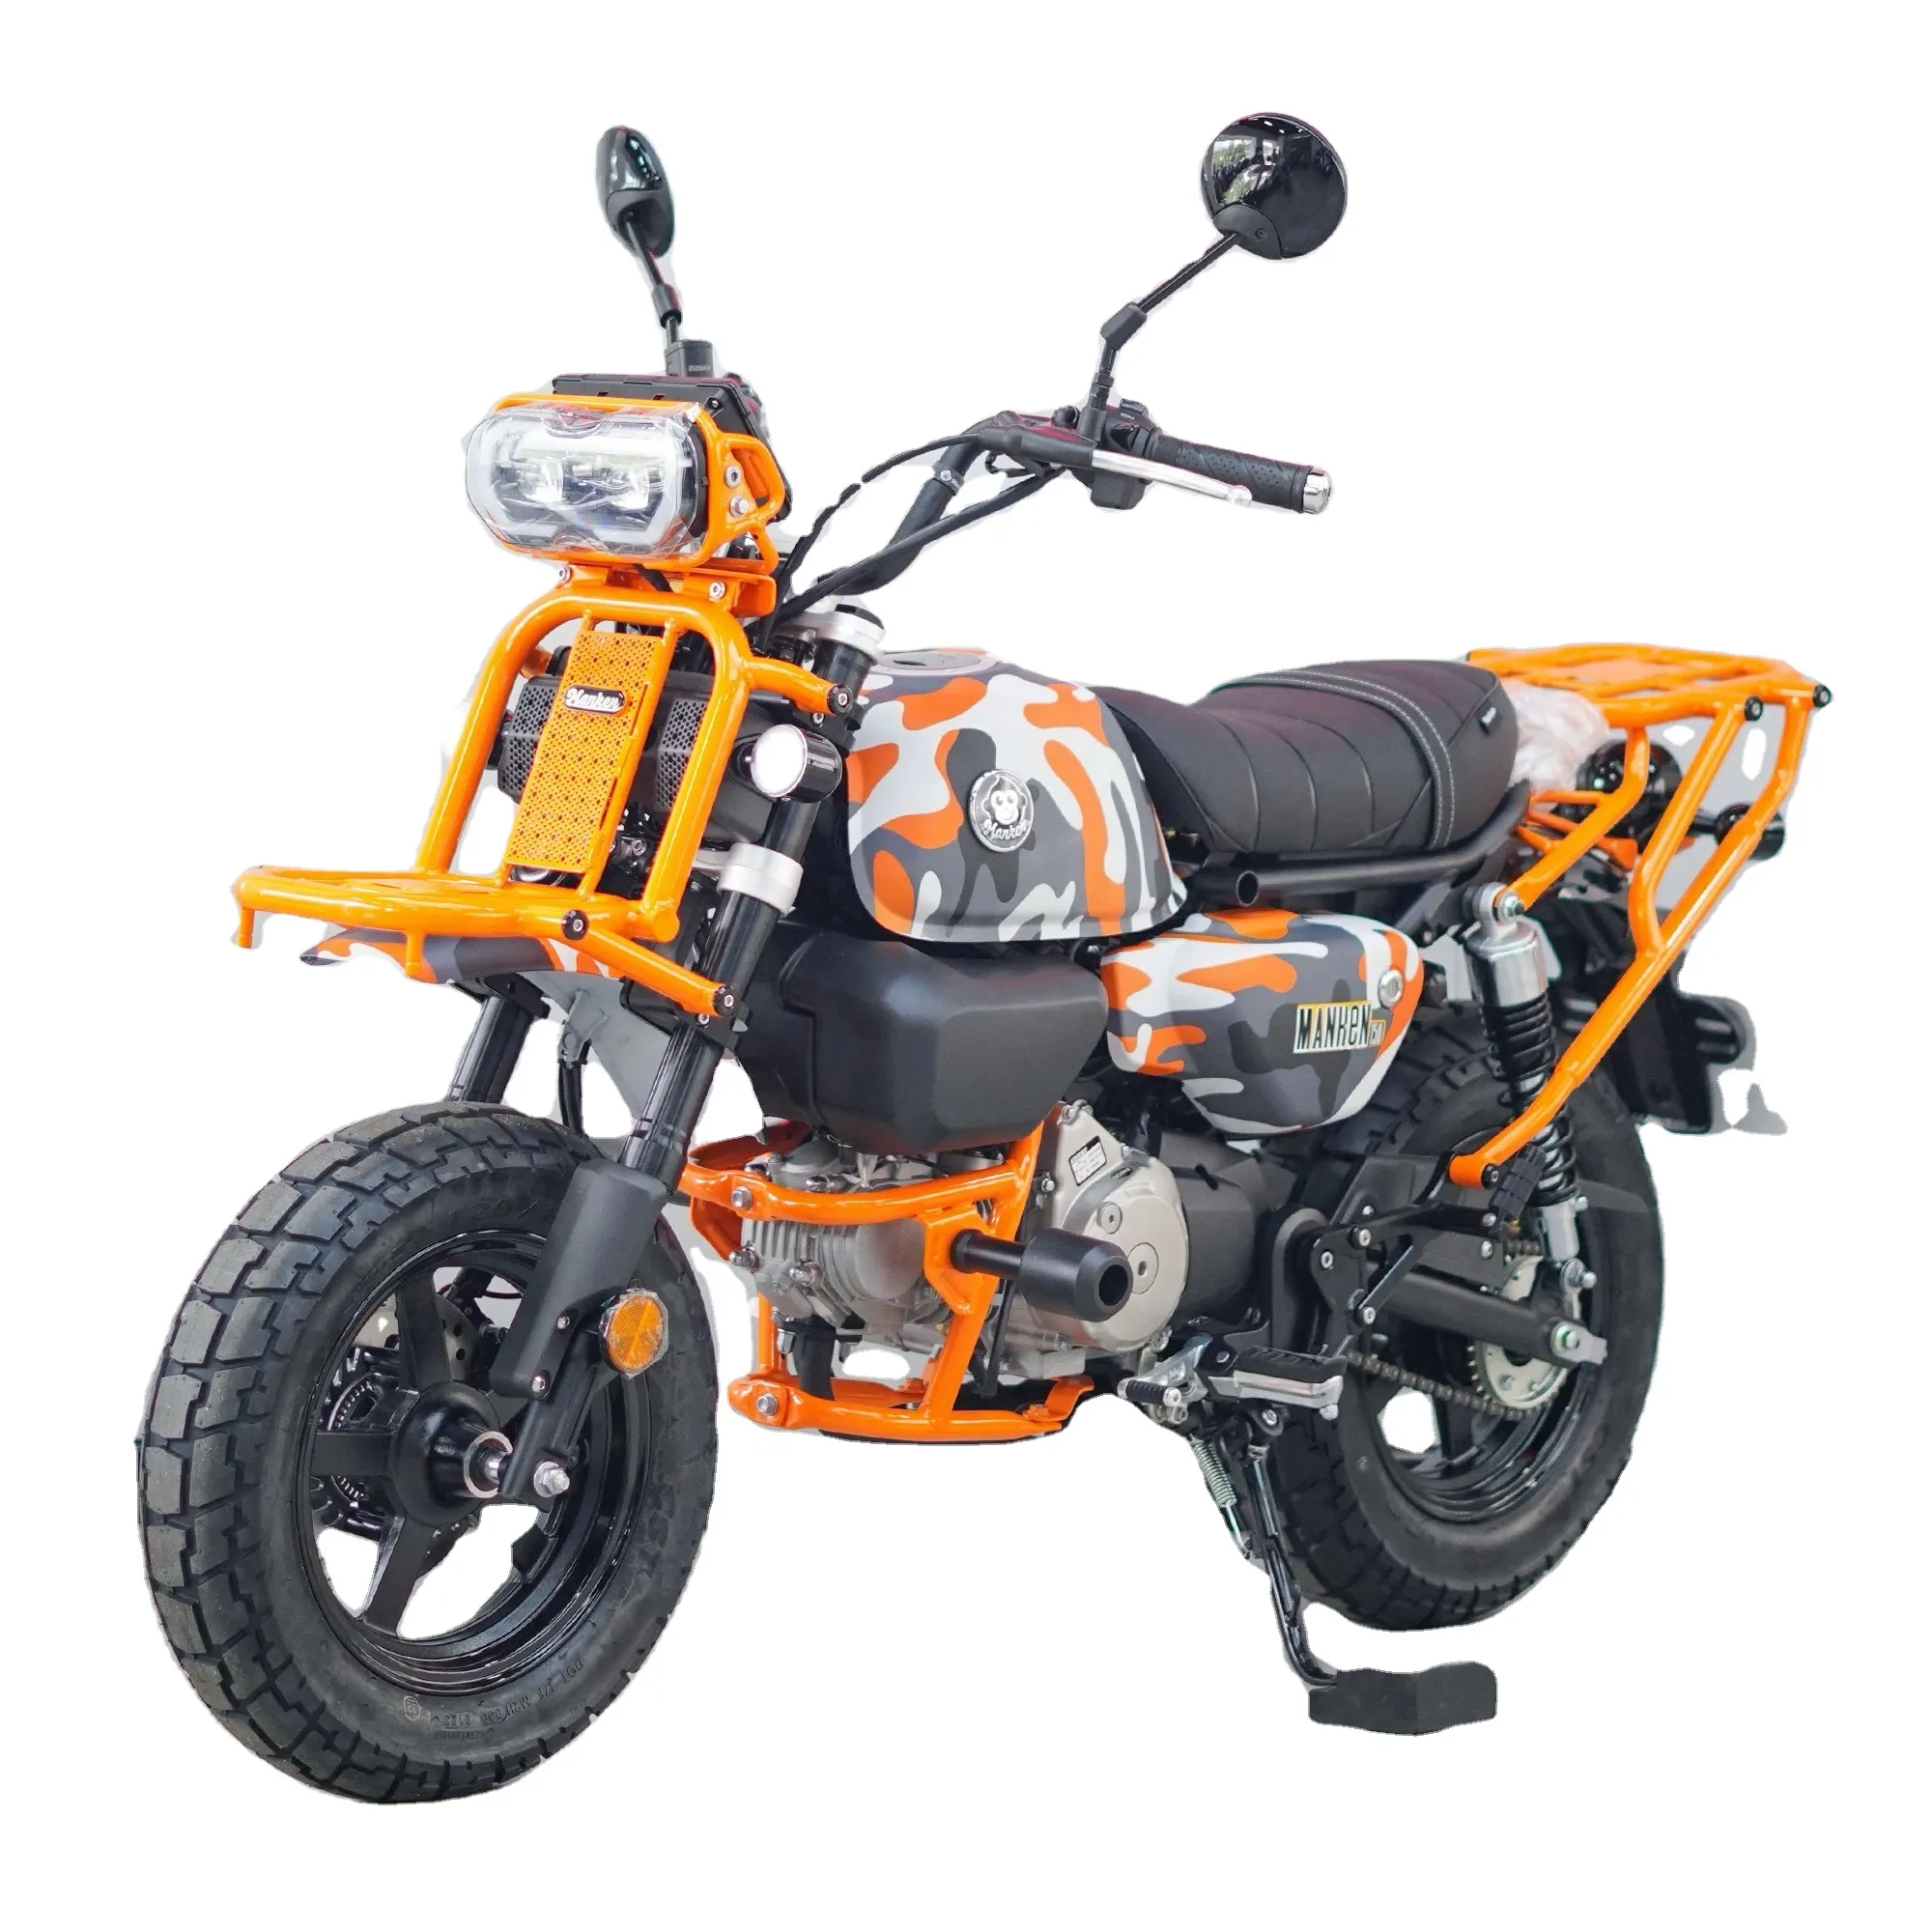 Desain baru sepeda motor Trail Manken motor Mini skuter bensin Off-Road 150cc roda tiga Homologated